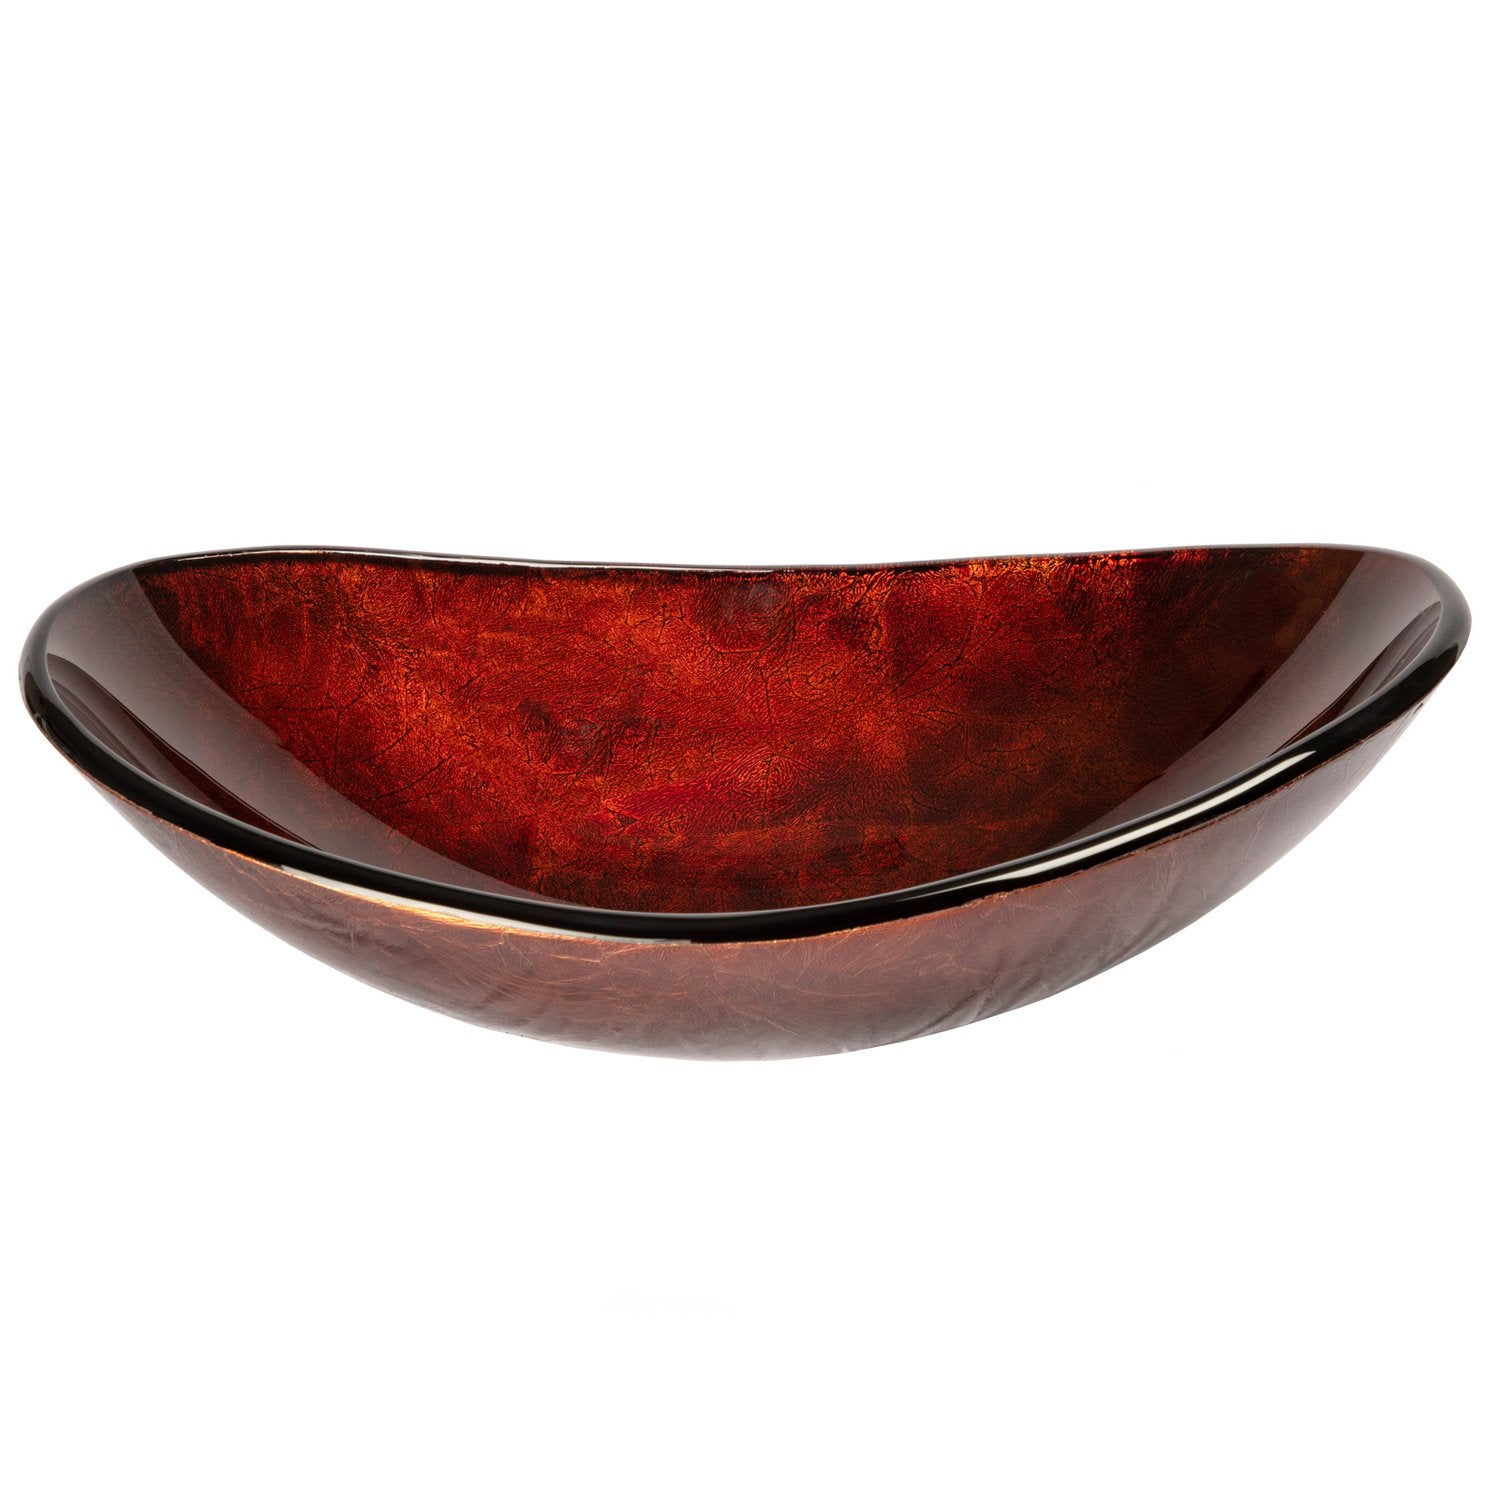 Eden Bath Canoe Shaped Red Copper Reflections Glass Vessel Sink